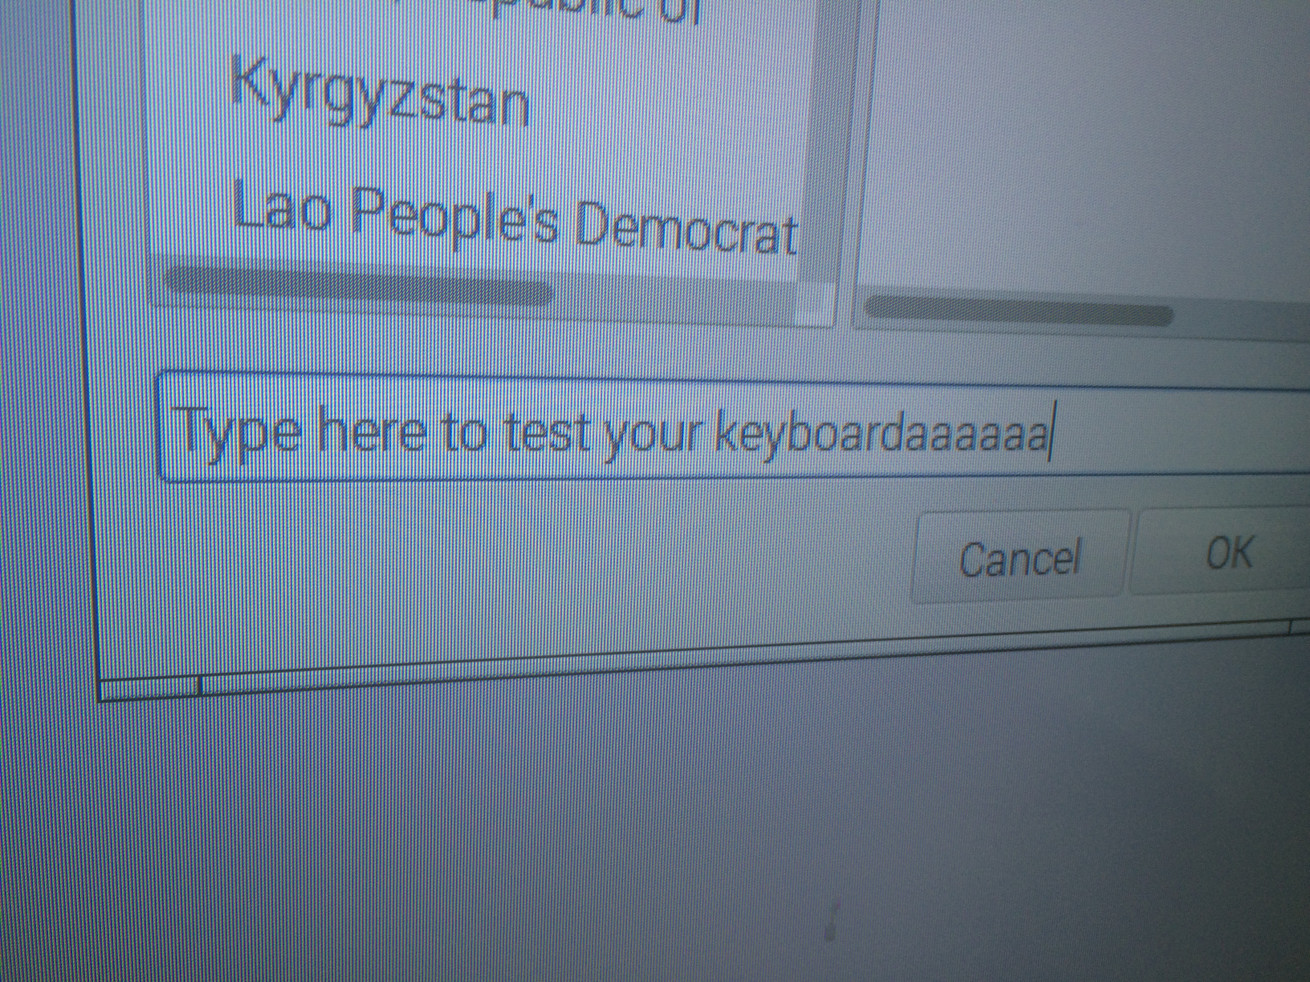 「Type here to test your keyboardaaaaaa」と入力している様子